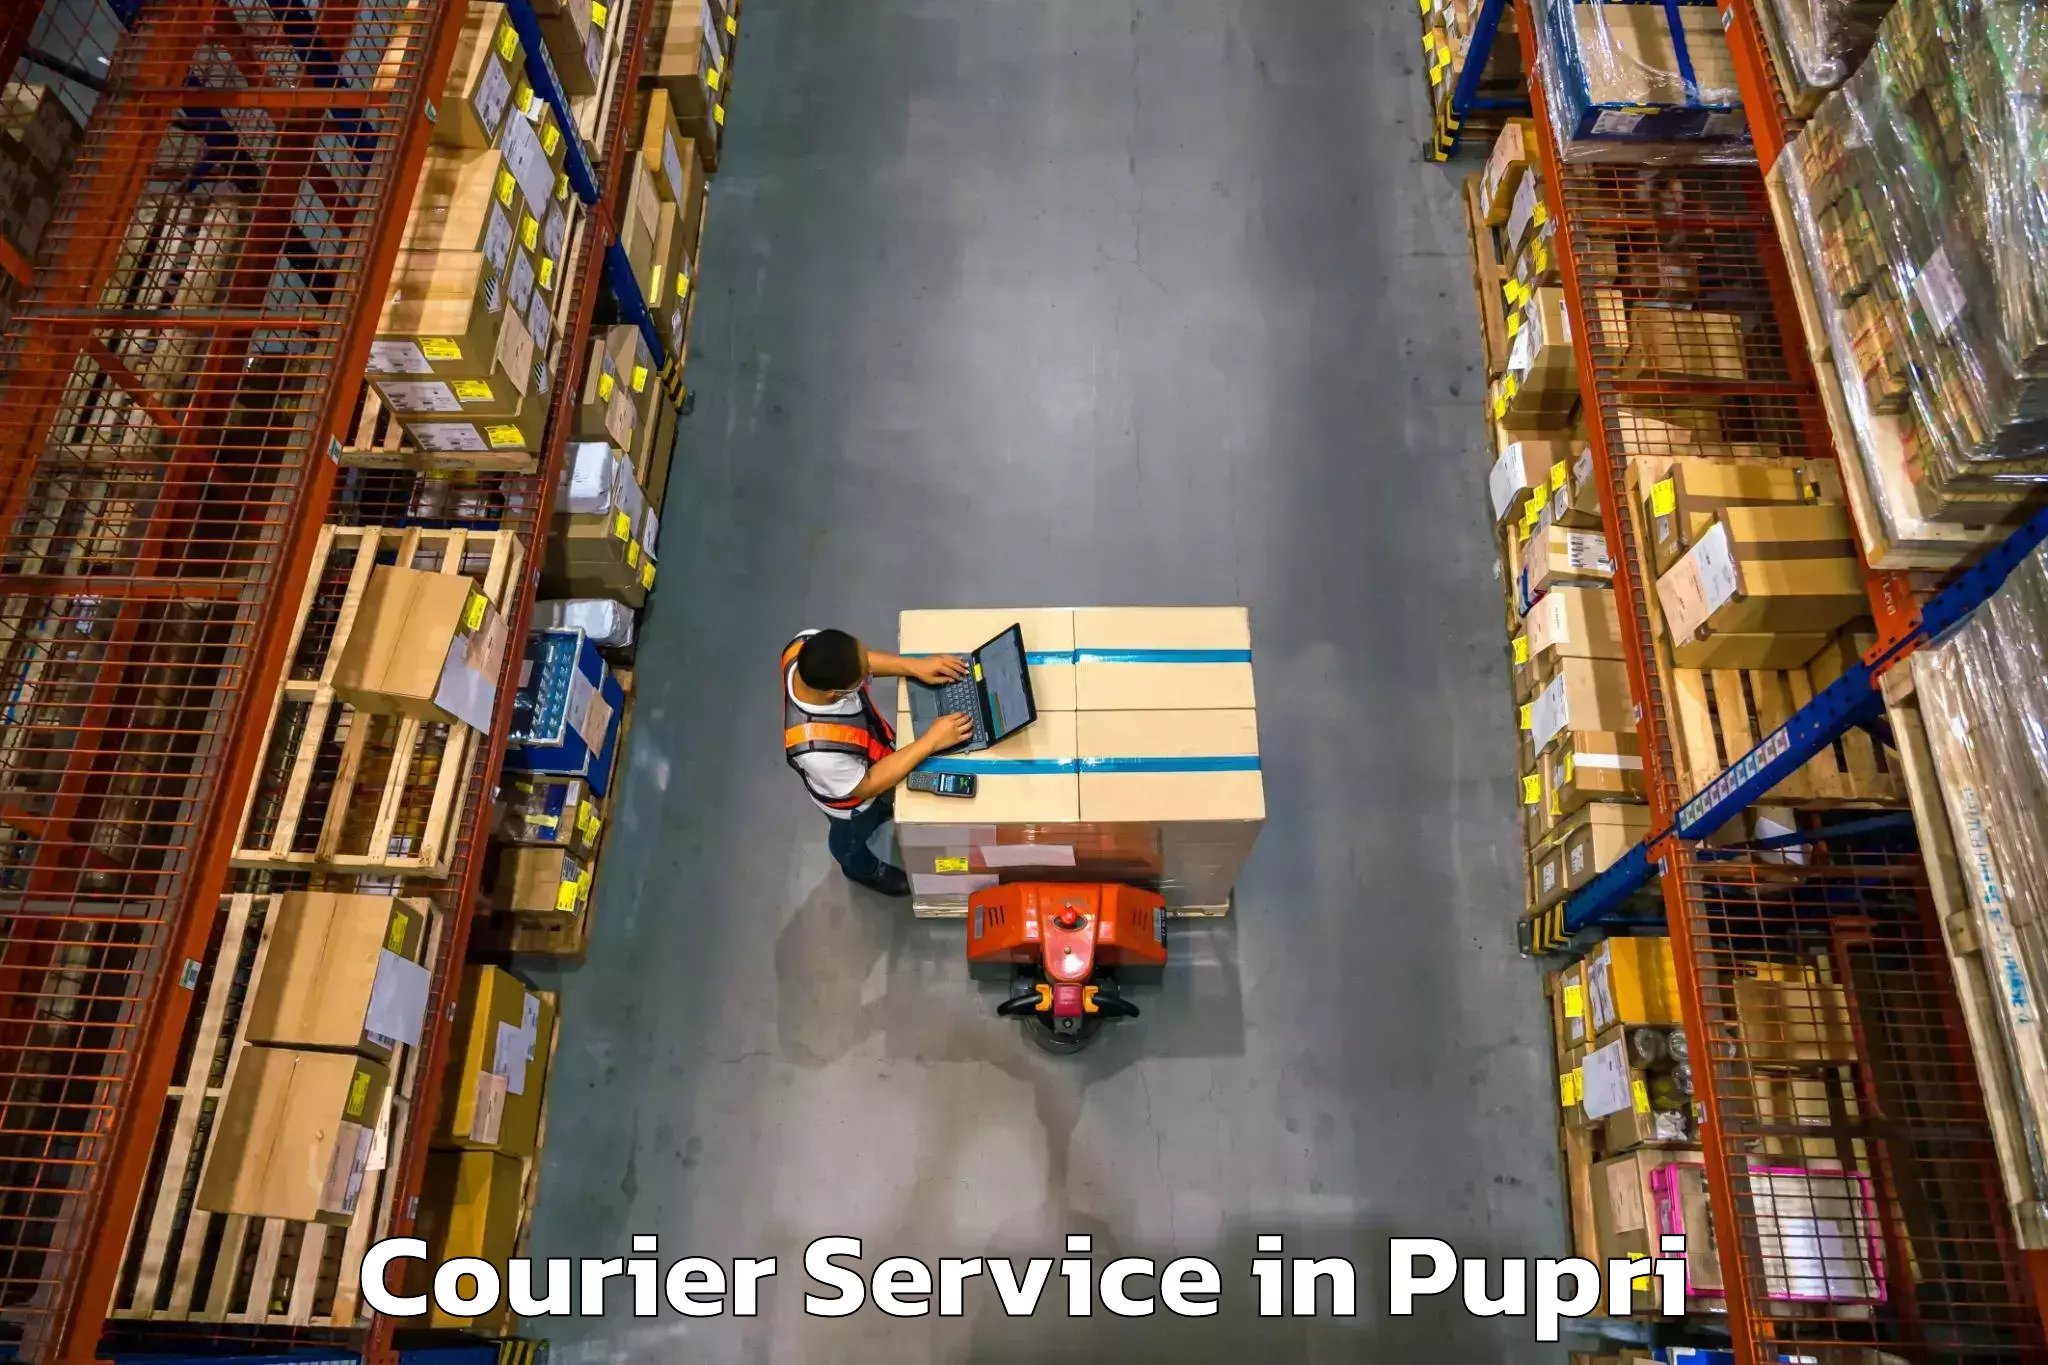 Specialized shipment handling in Pupri